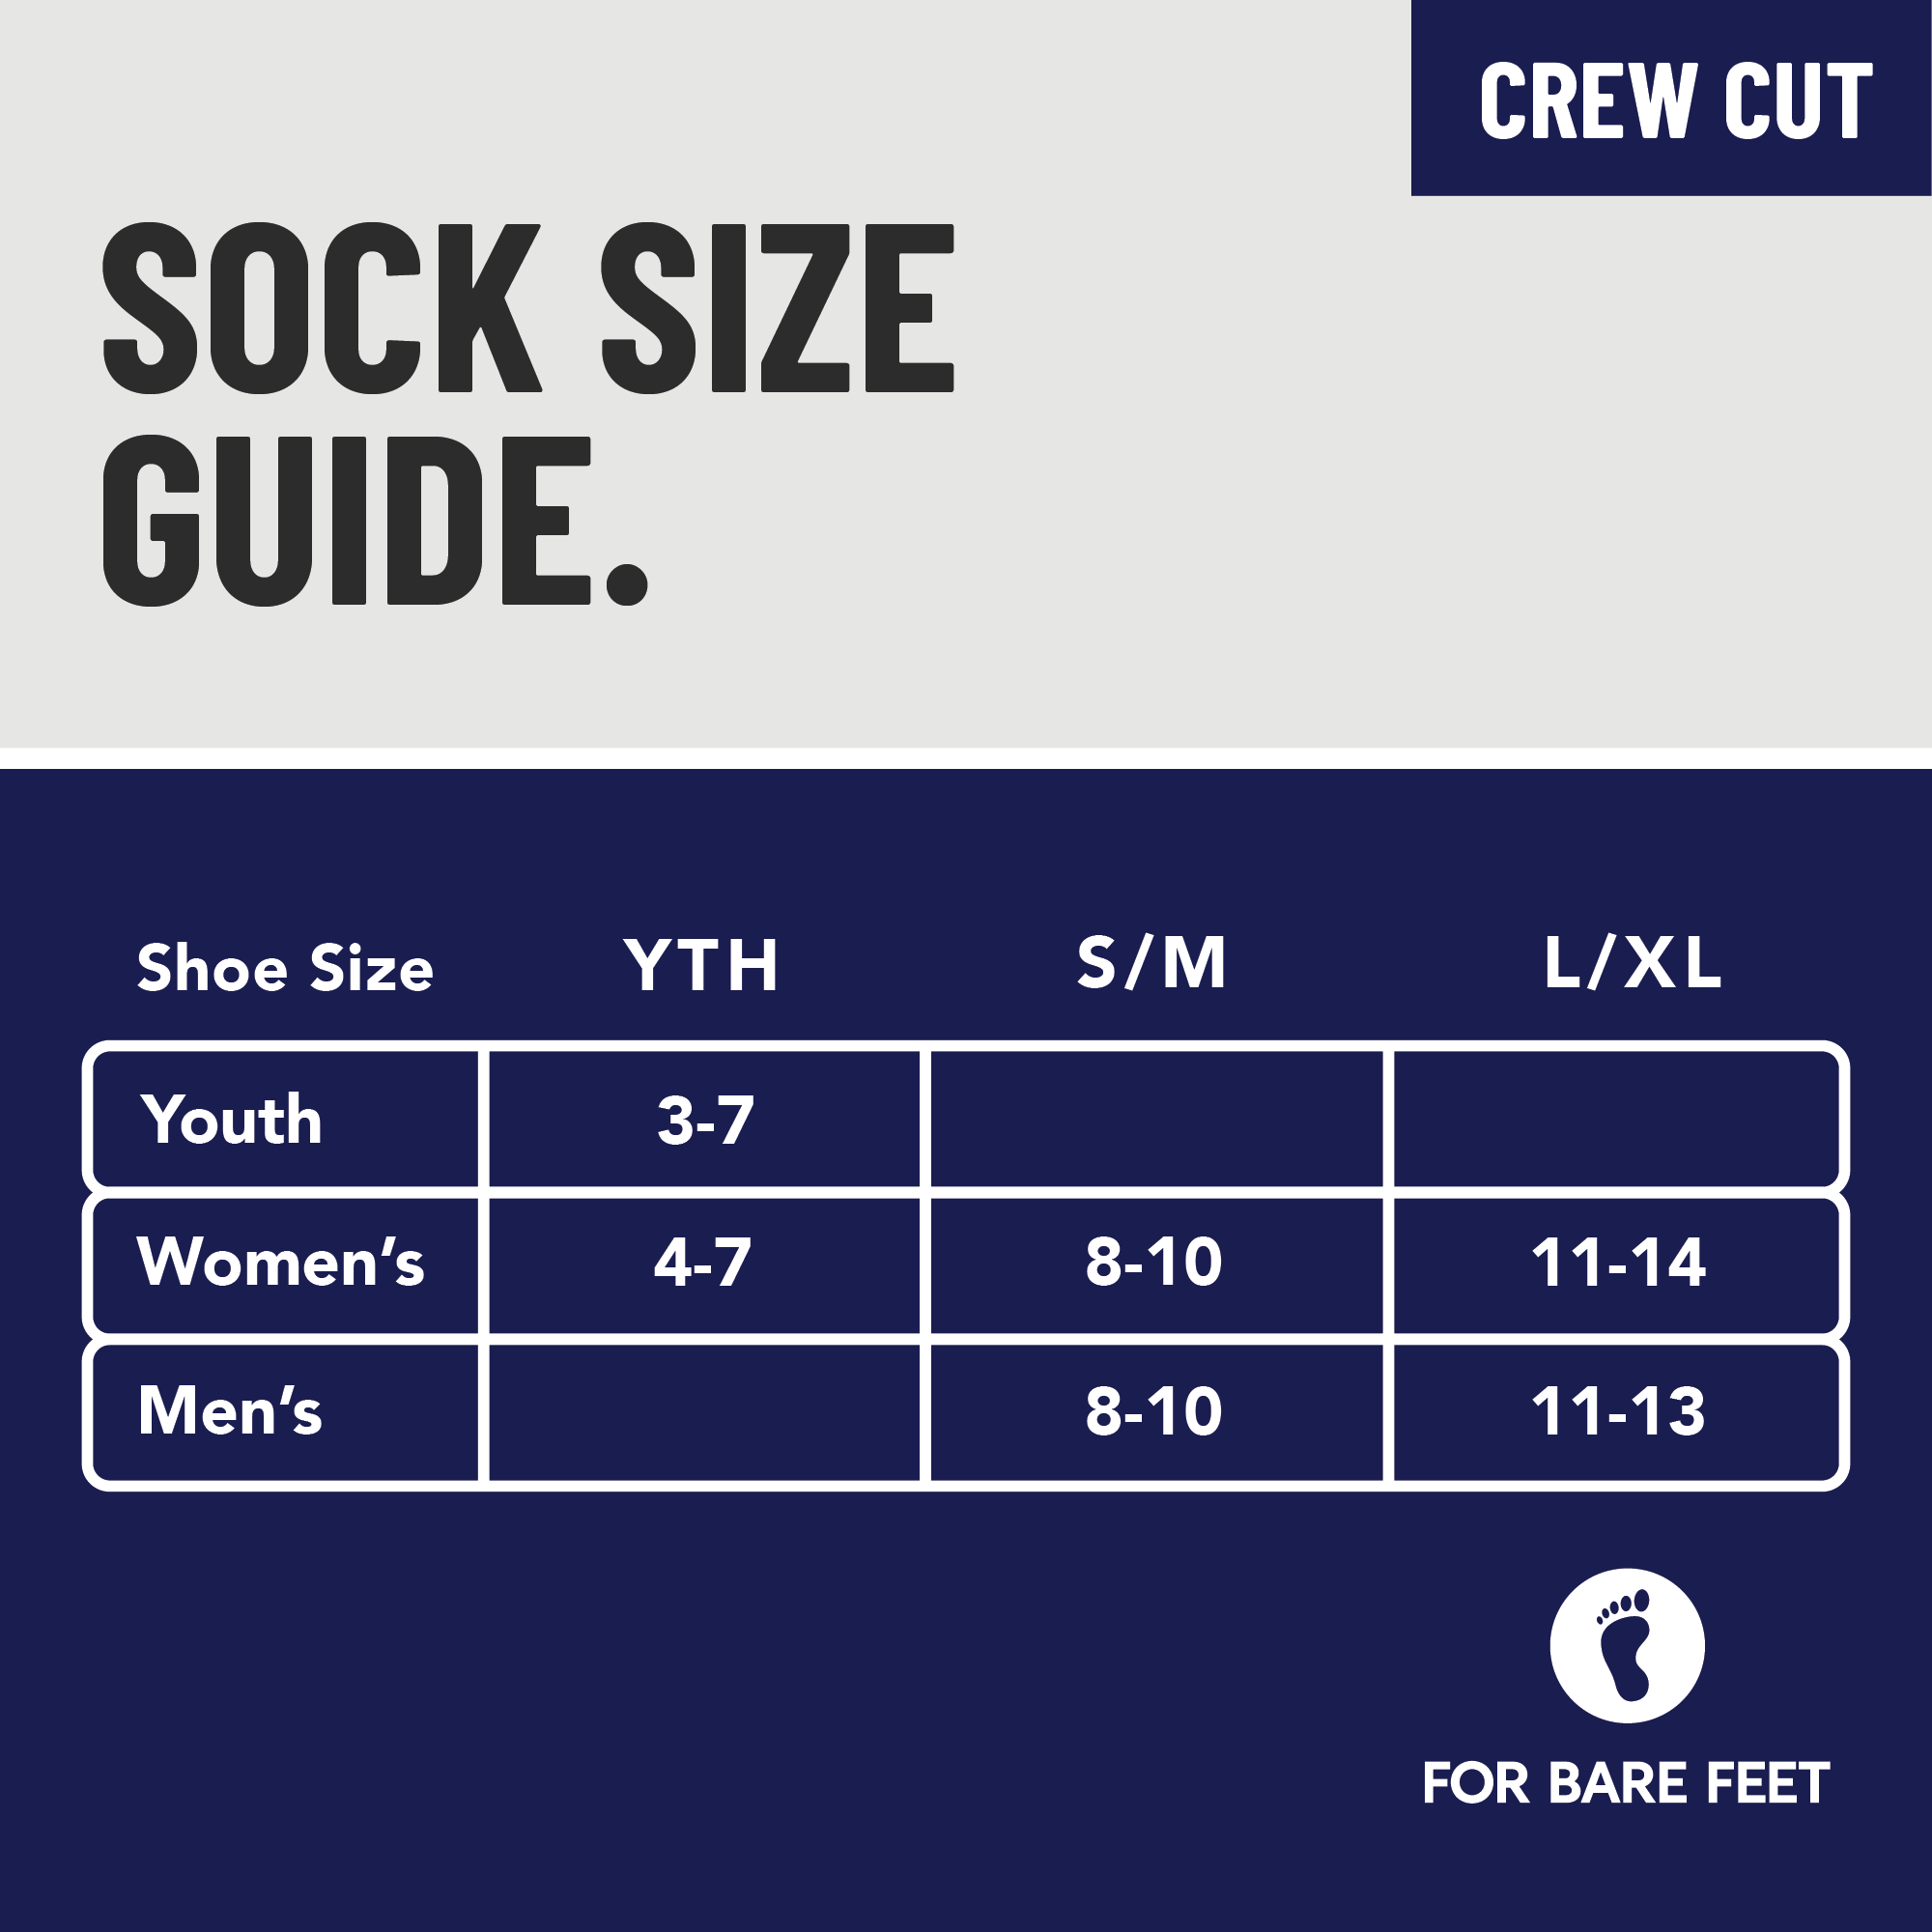 Premium Crew Socks Static Stripe Teal